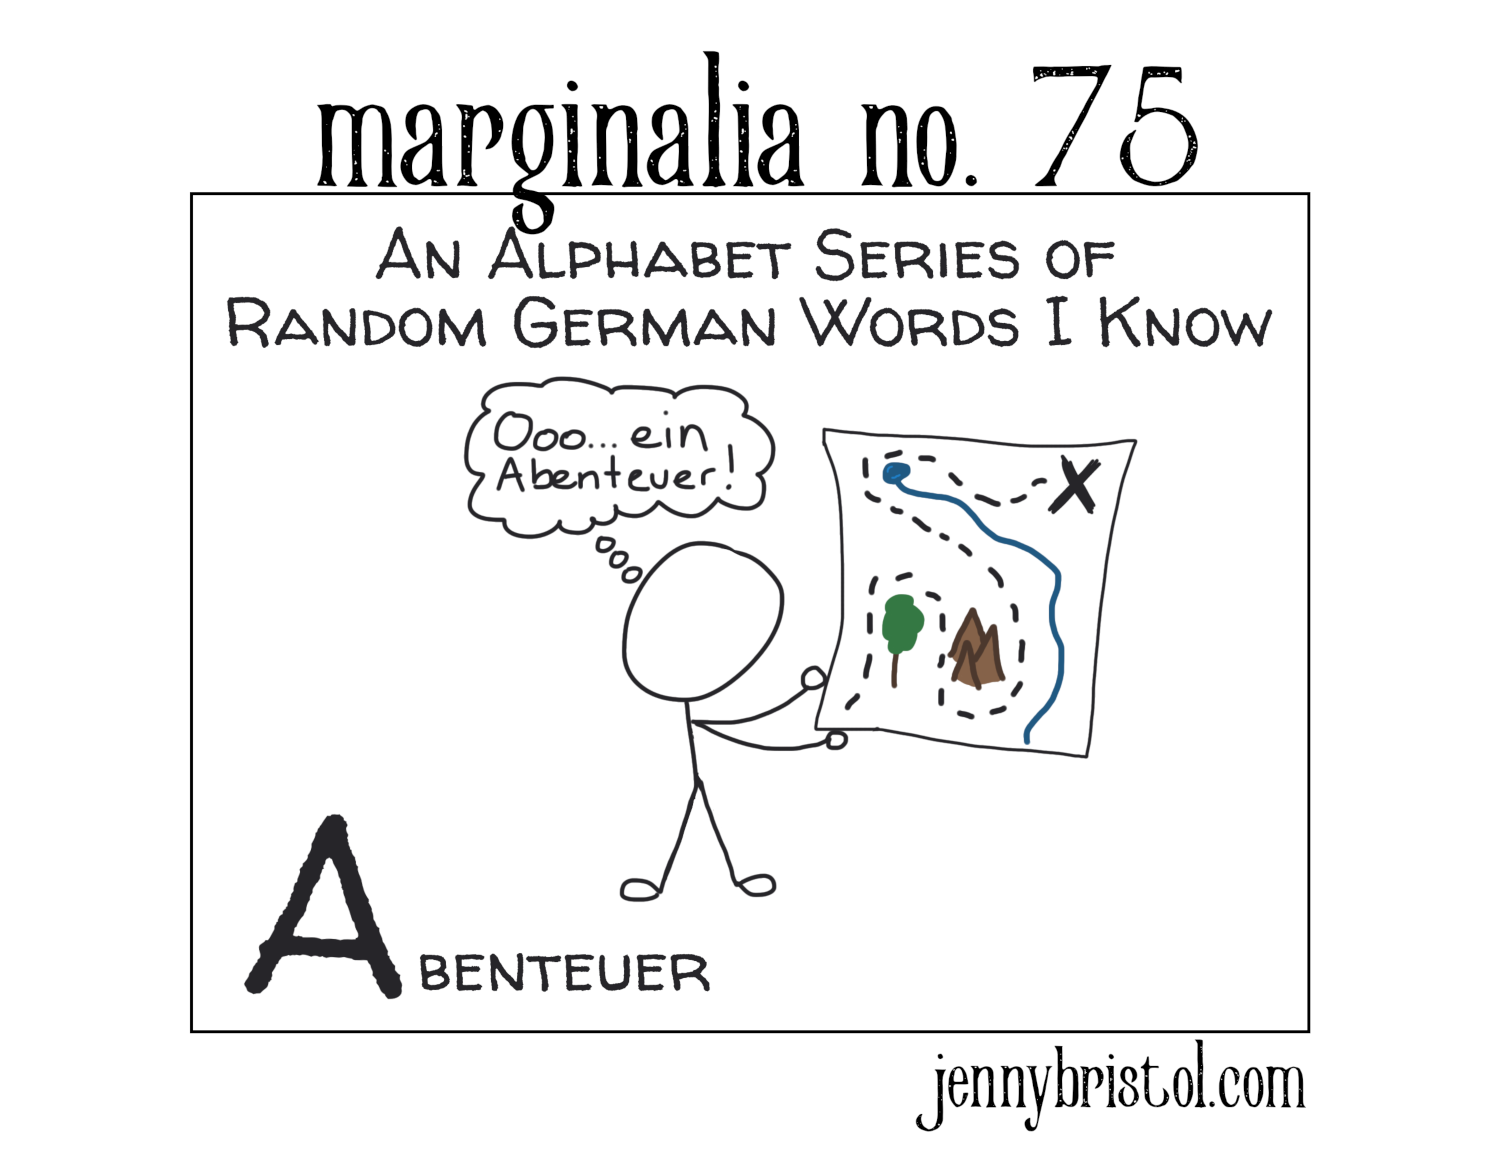 Marginalia No. 75 to post